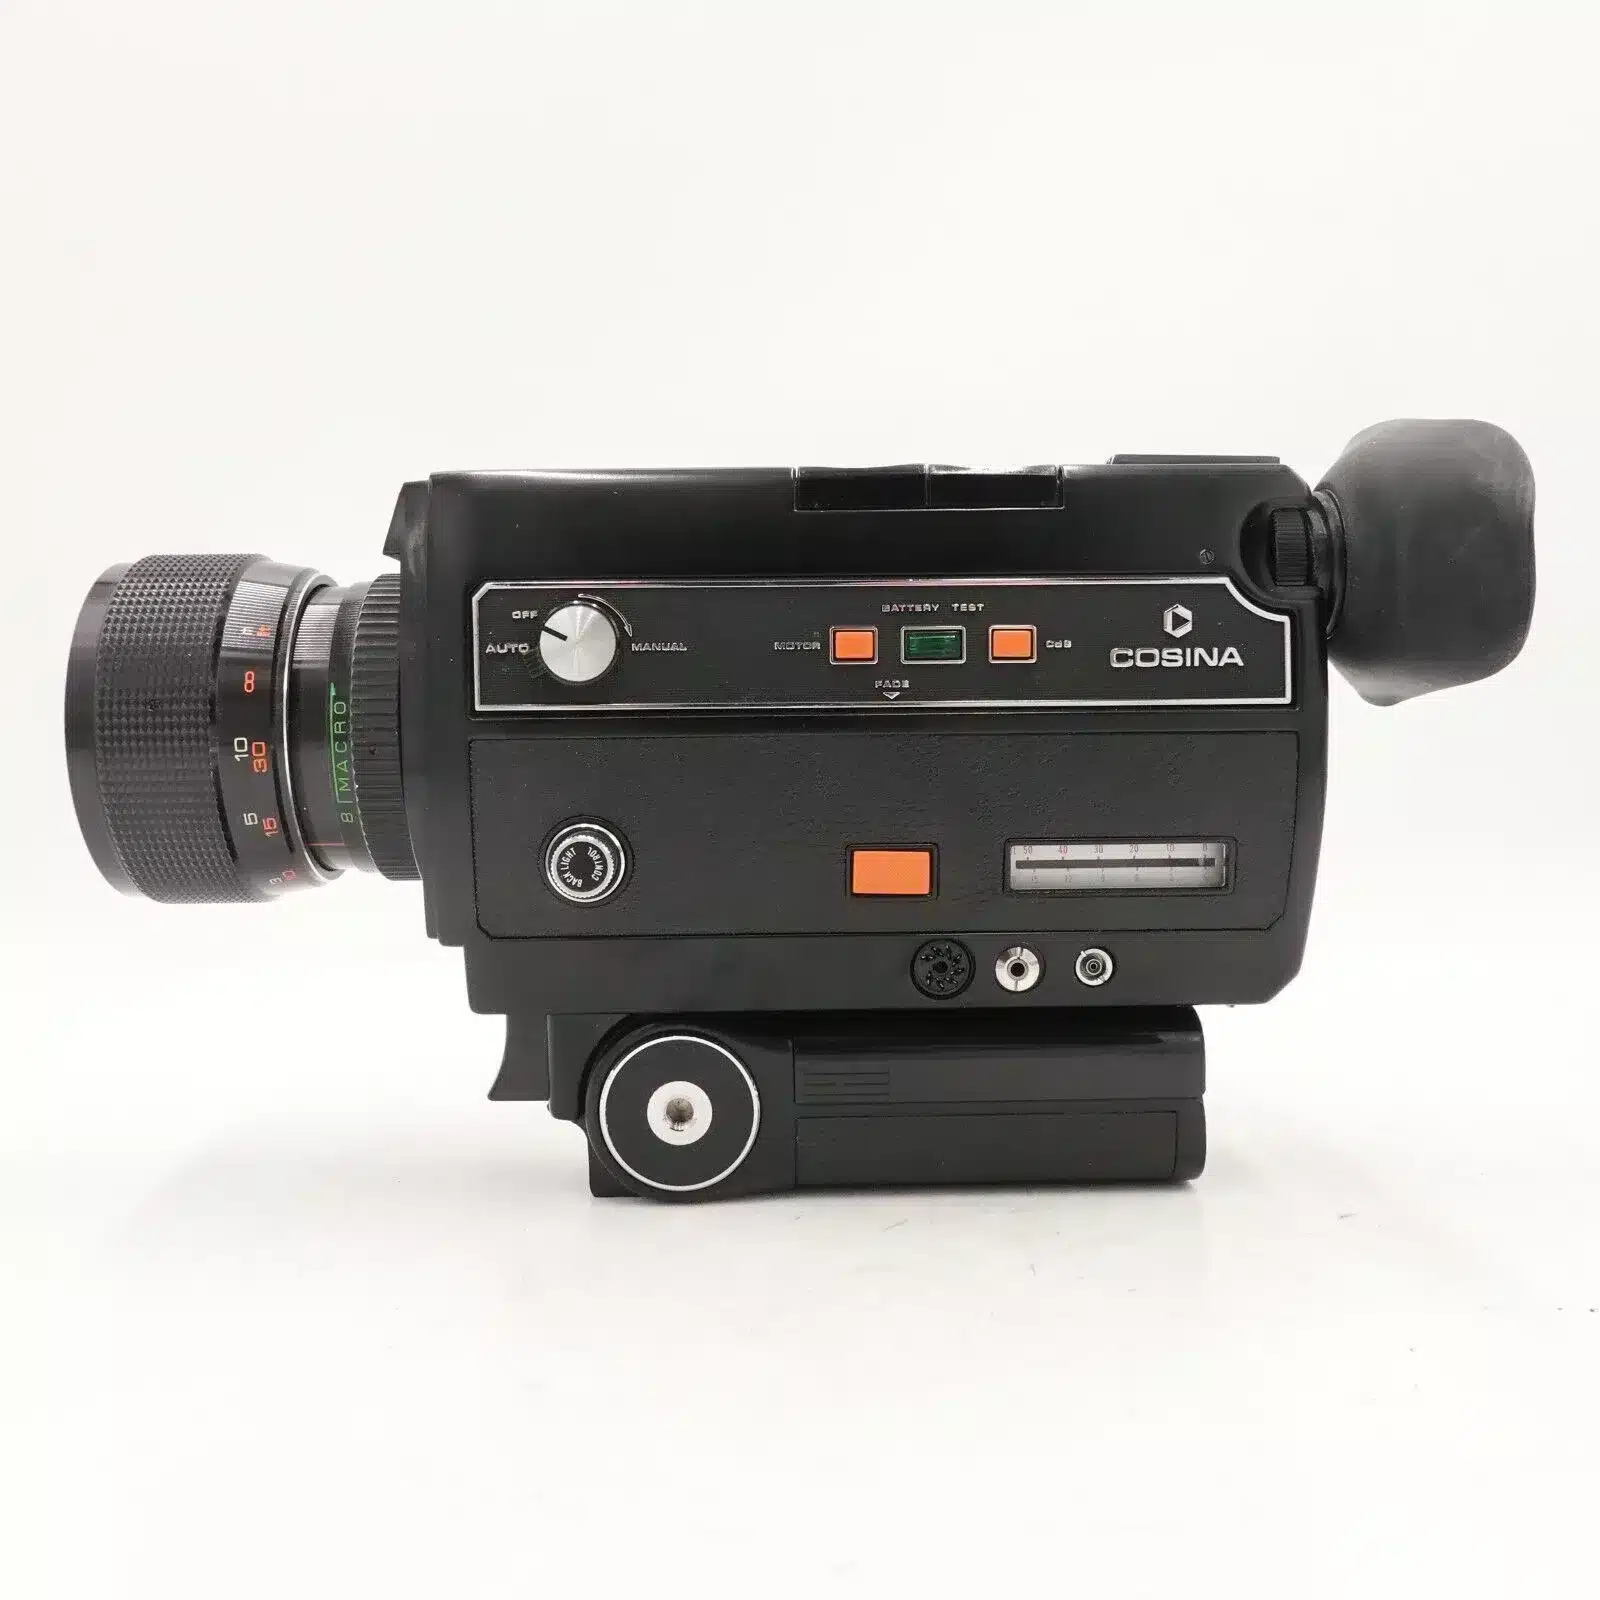 2000s movie camera